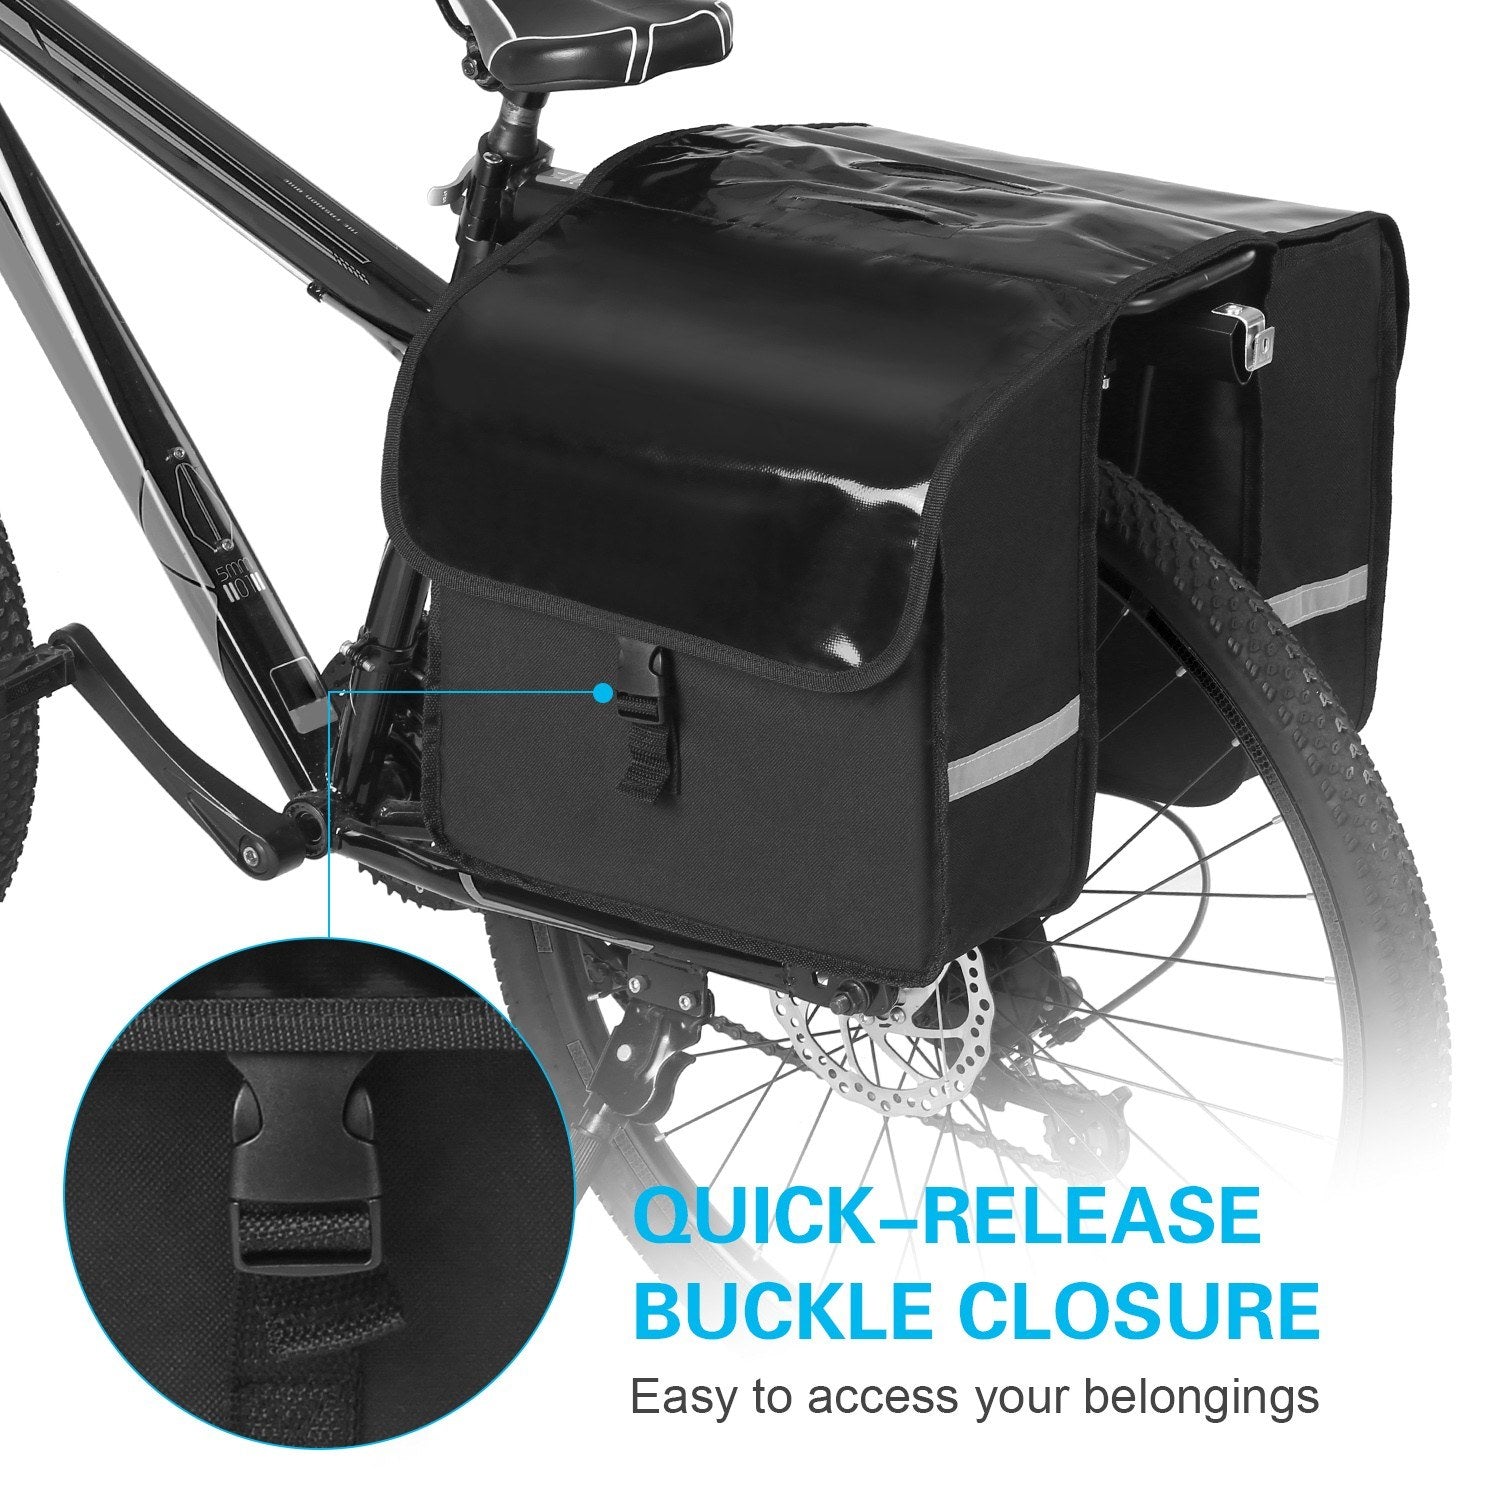 28L Water Resistant Bicycle Rear Seat Carrier Bag Rack Trunk Bags Bike Commuter Bag Pannier